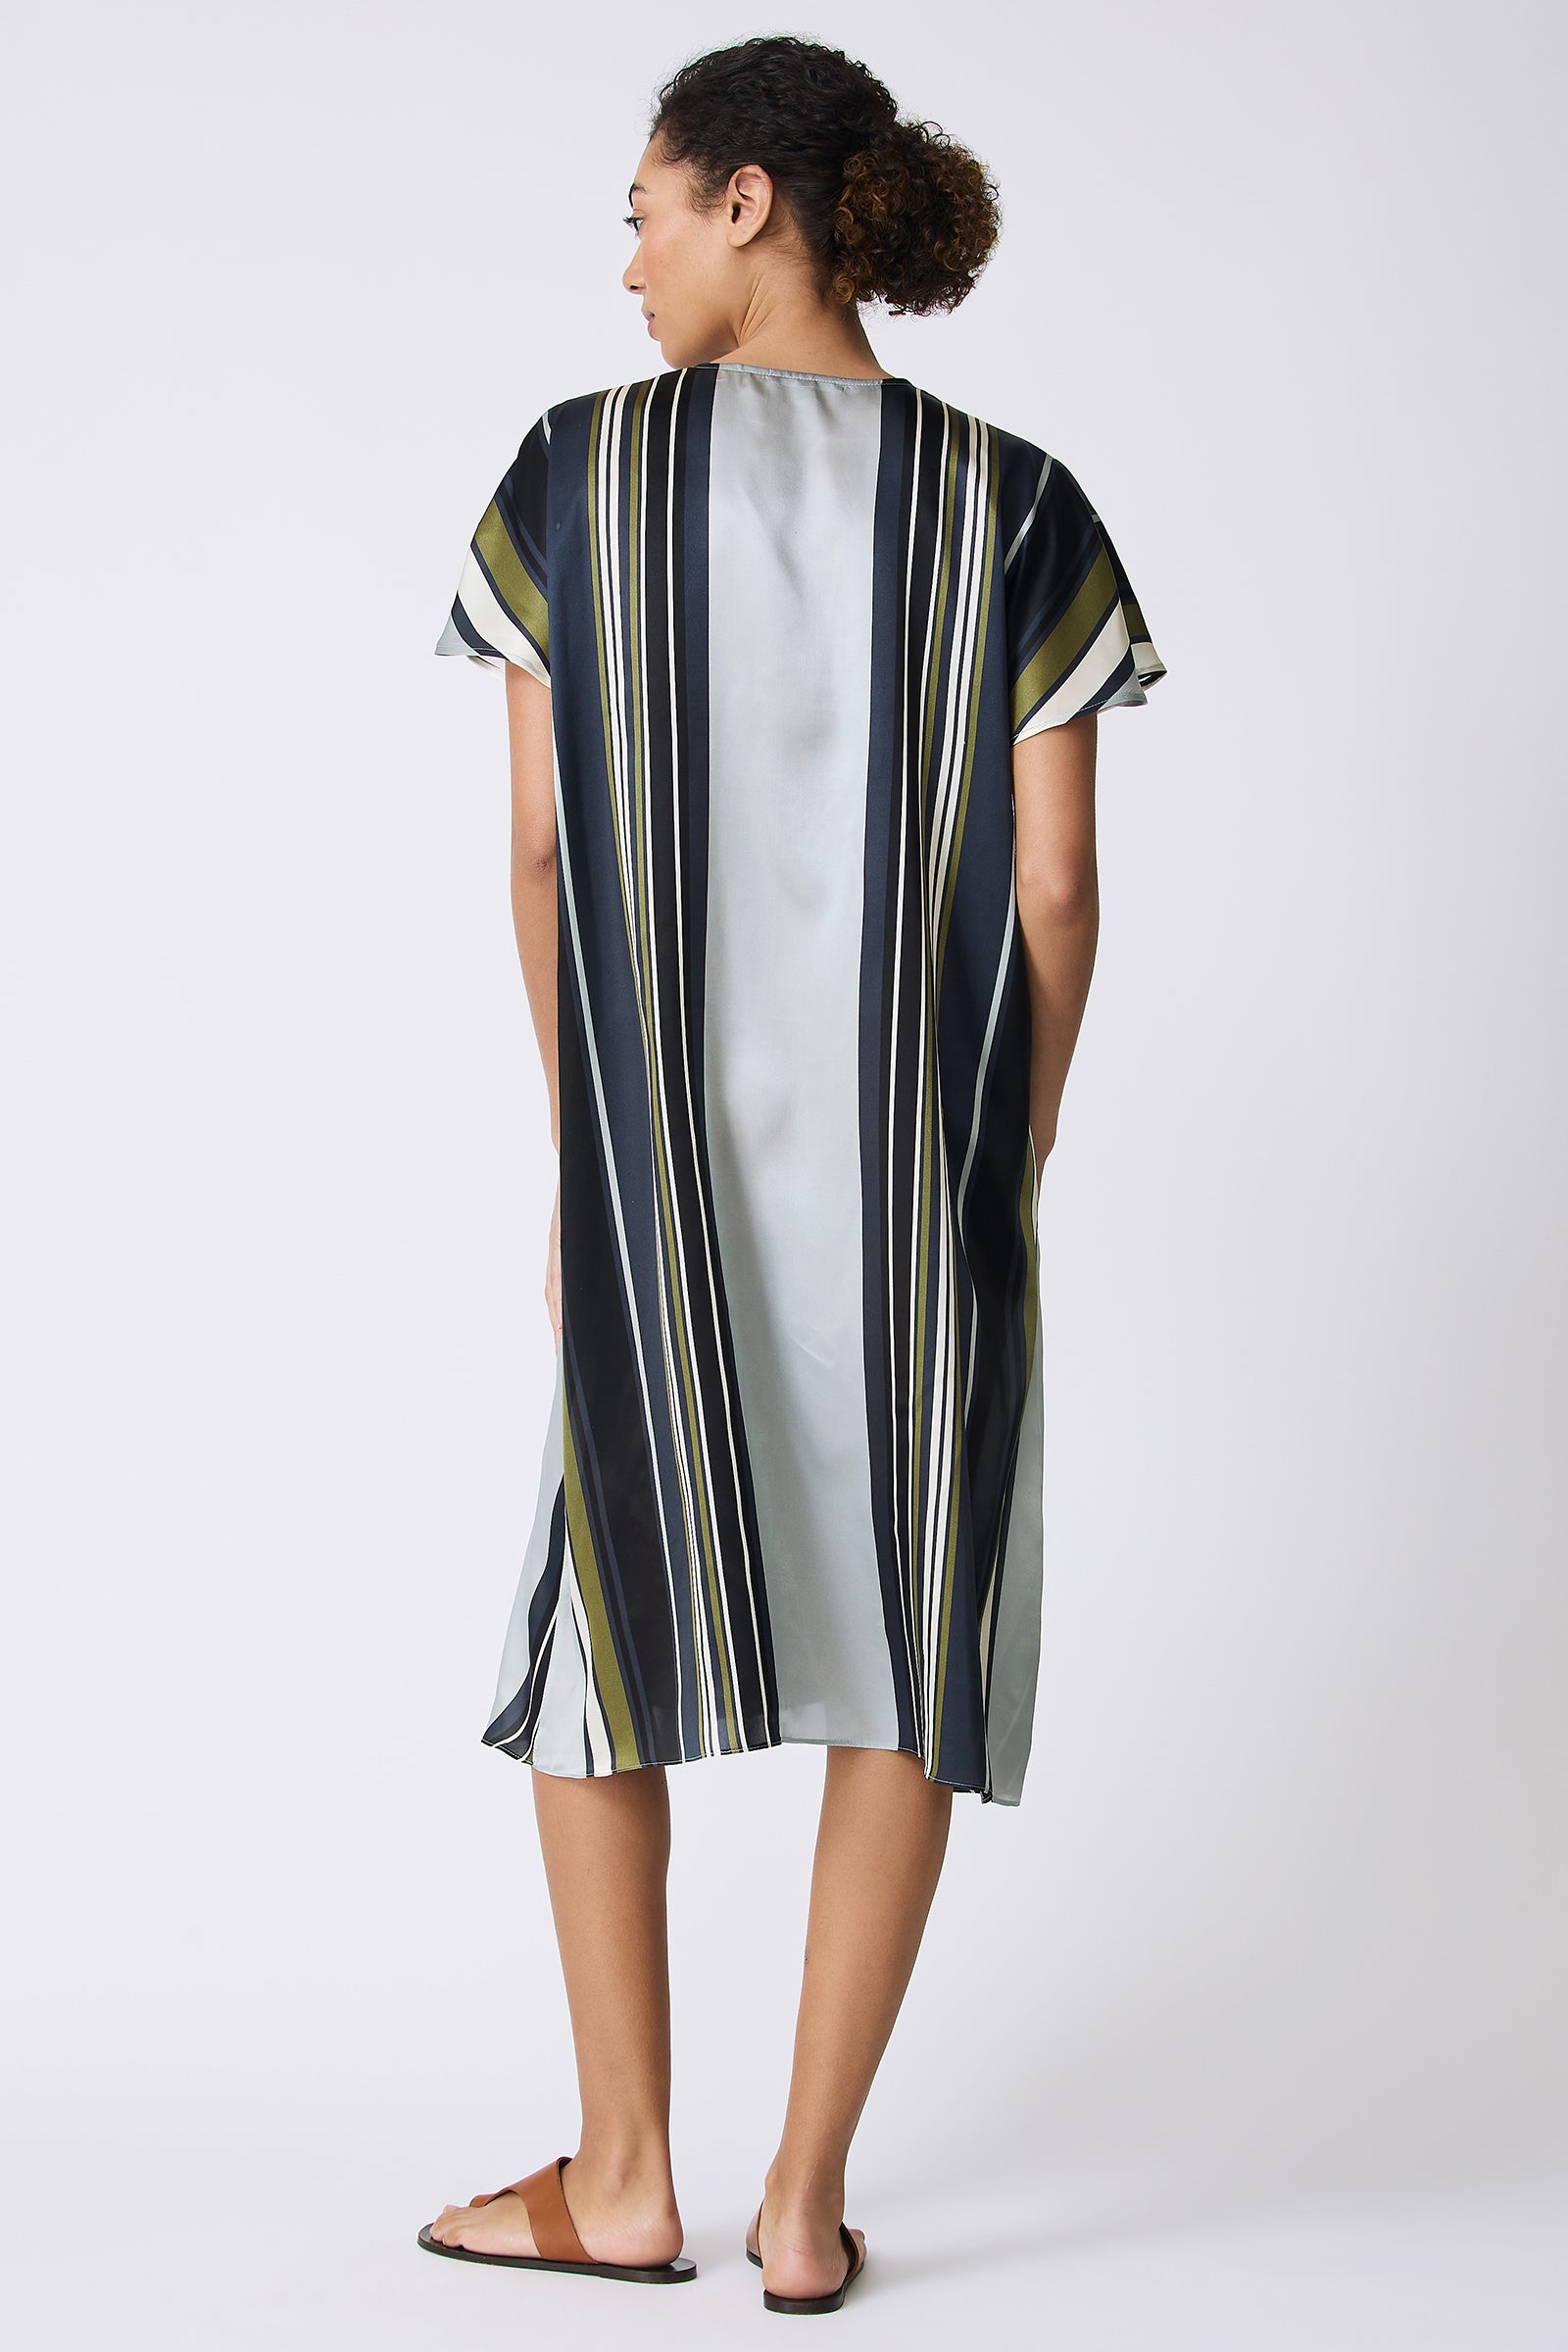 Kal Rieman Vanna Gather Front Dress in Multi Stripe on model full back view